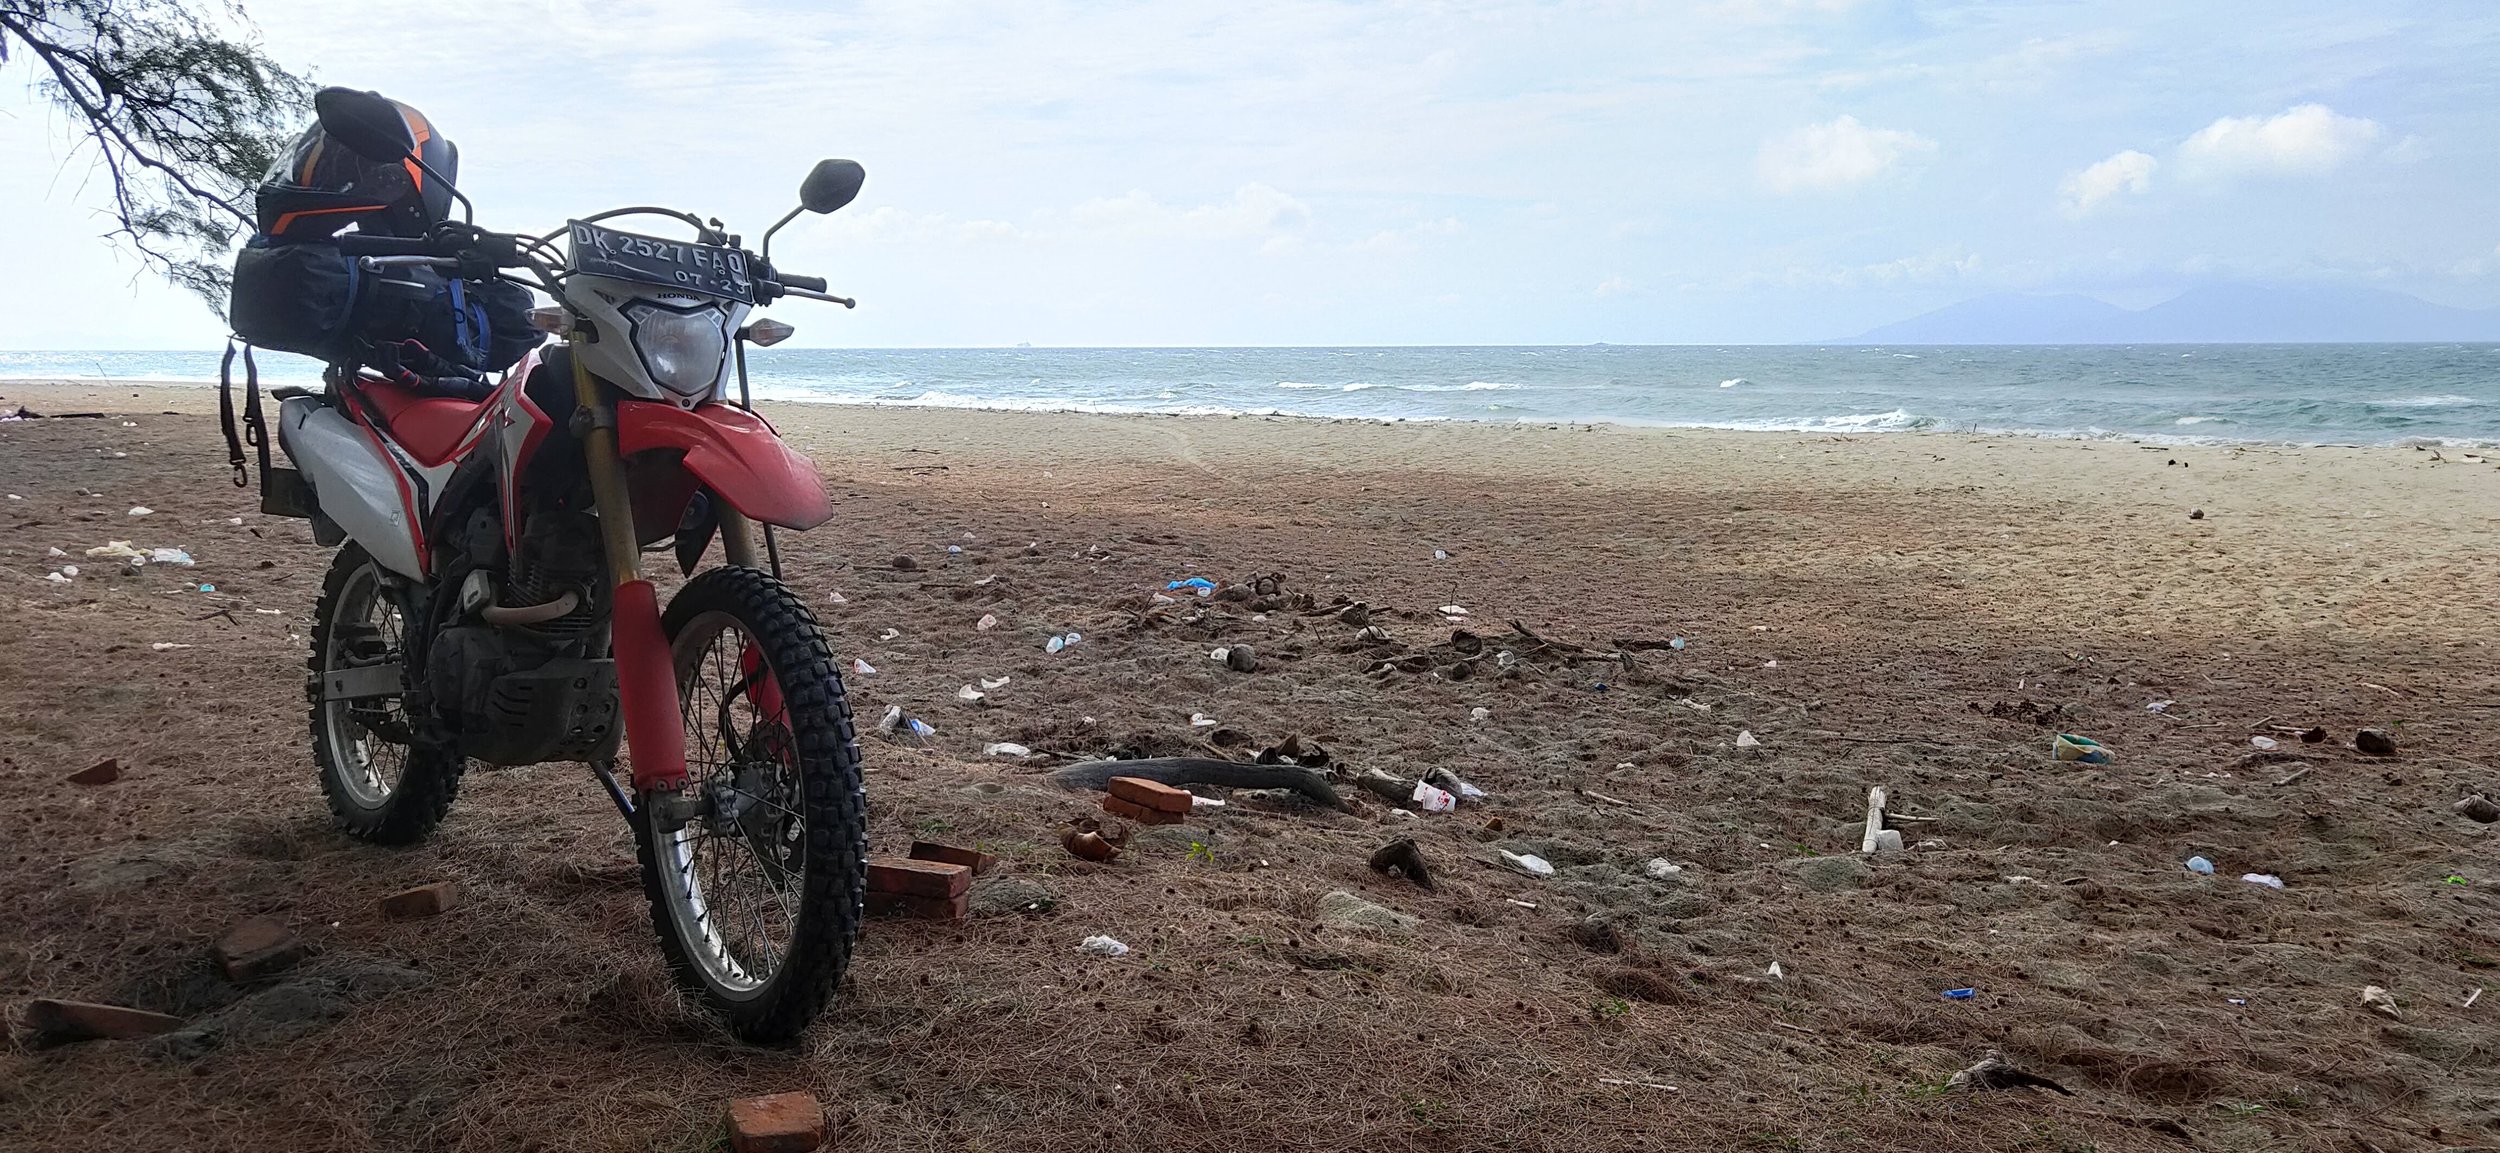 Dustin-Evans-Indonesia-Adventure-Rider-Radio-Motorcycle-Podcast-1.jpg